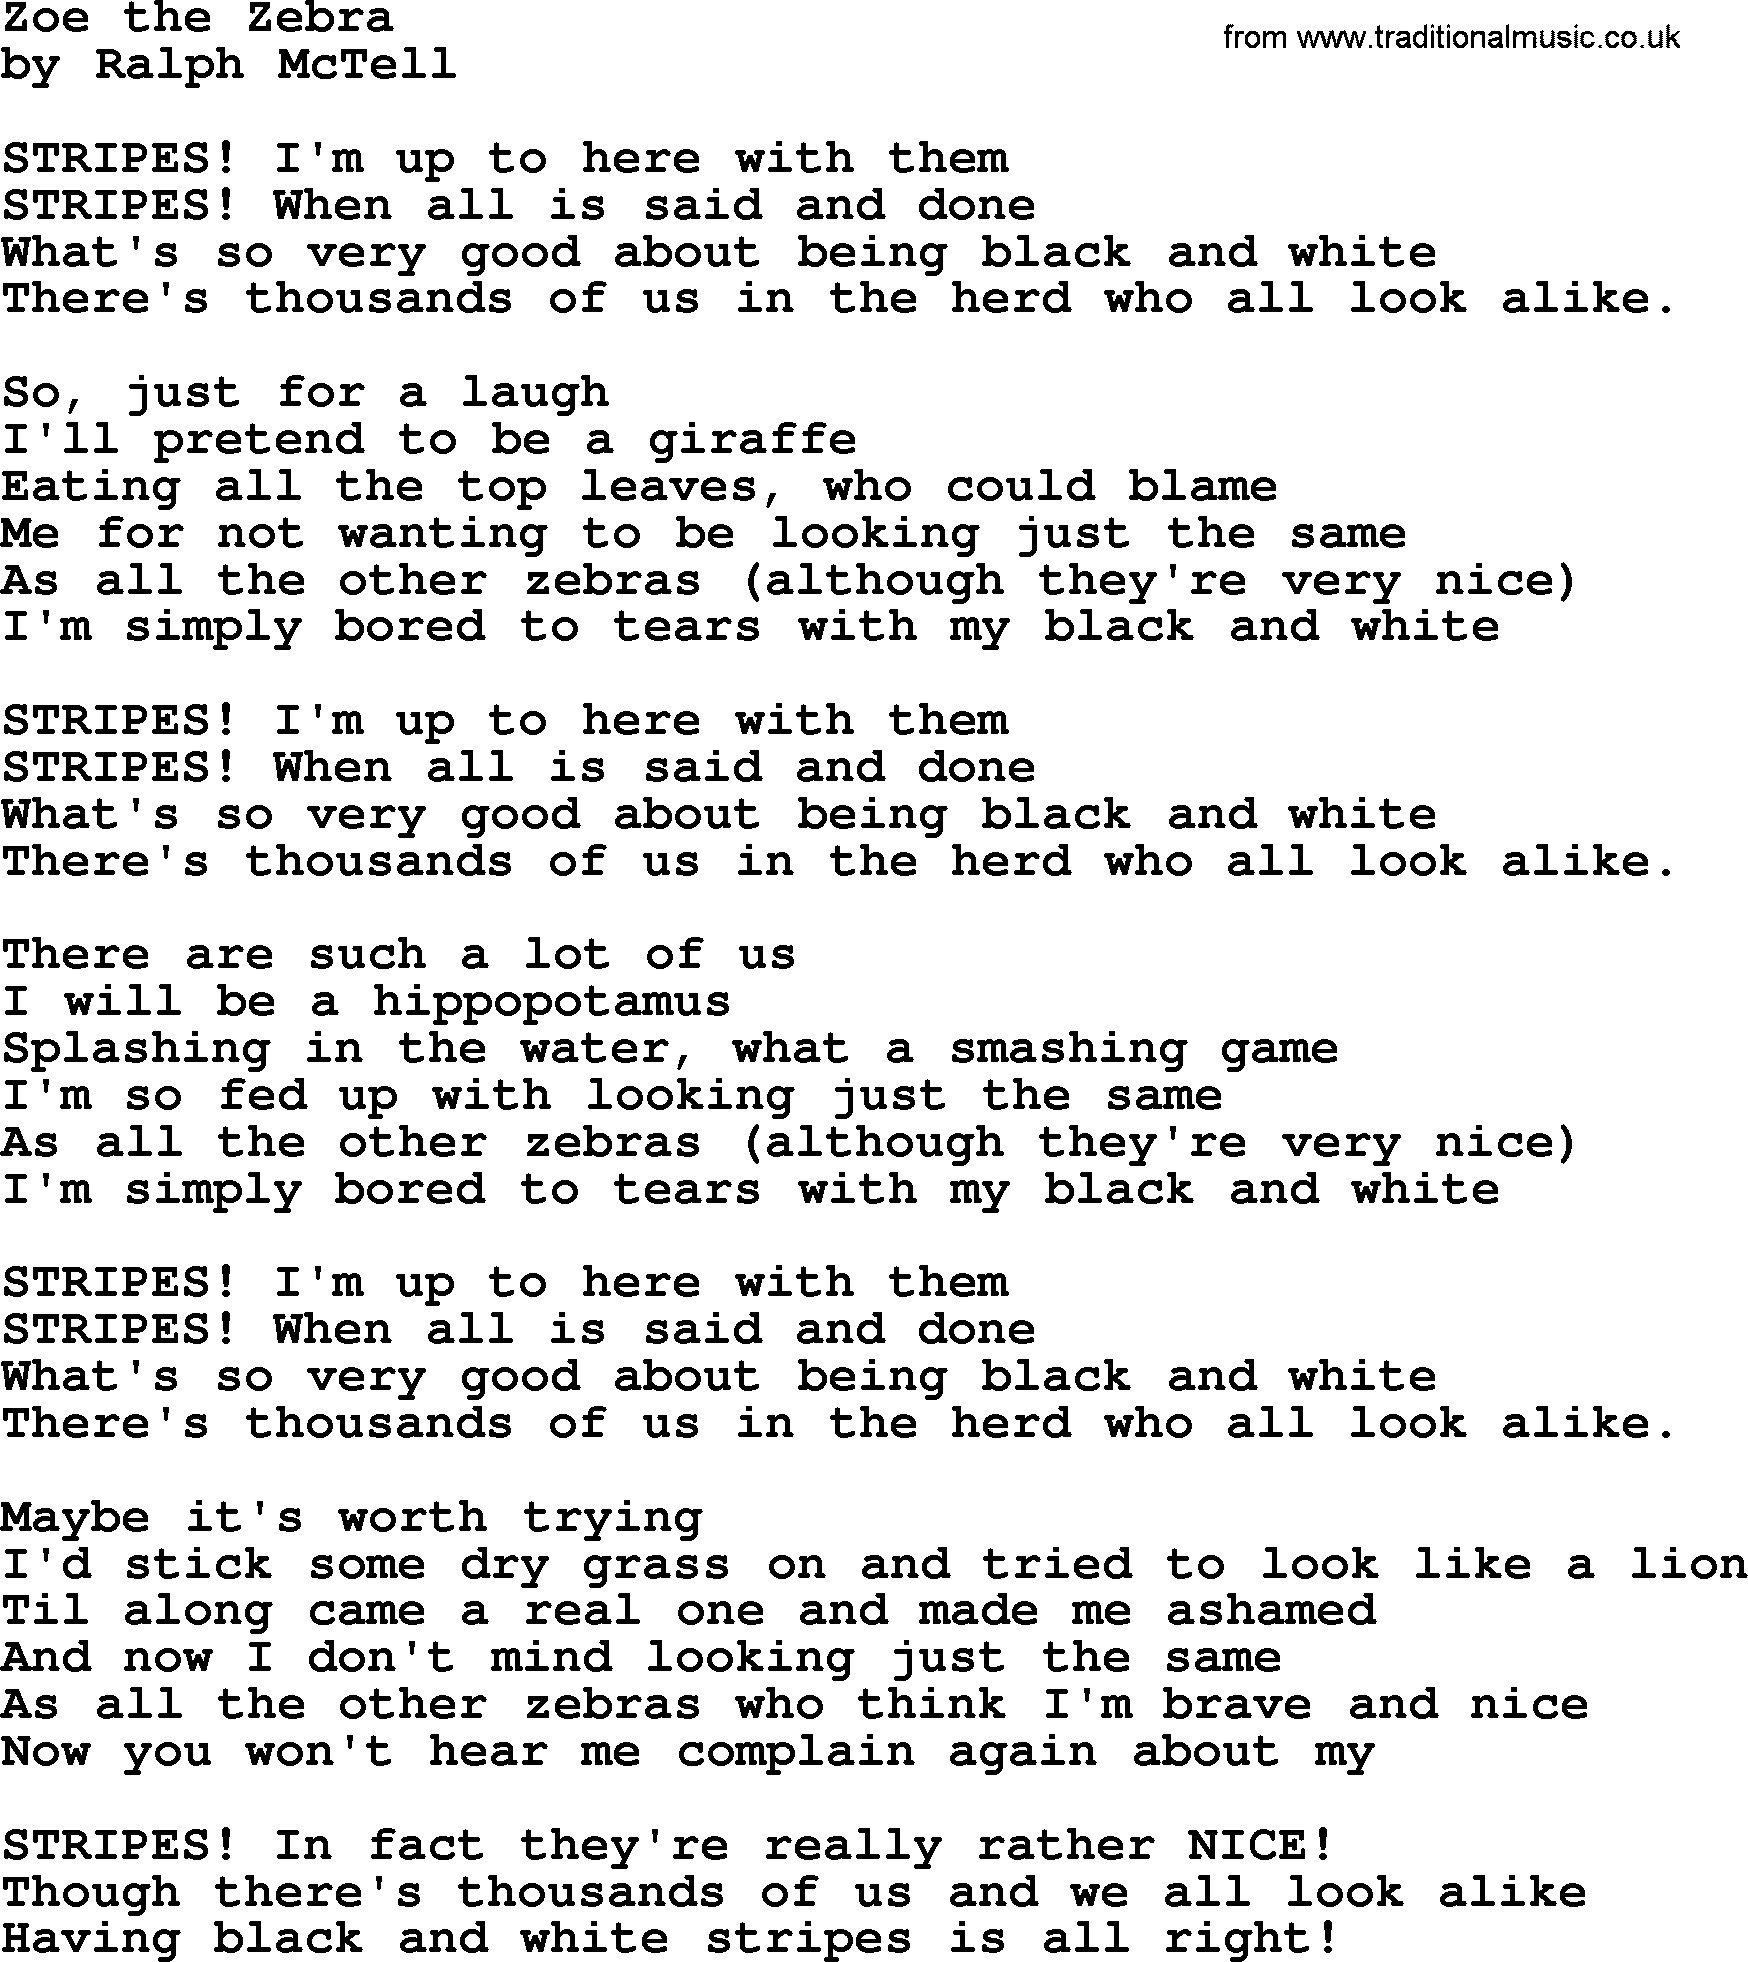 Ralph McTell Song: Zoe The Zebra, lyrics